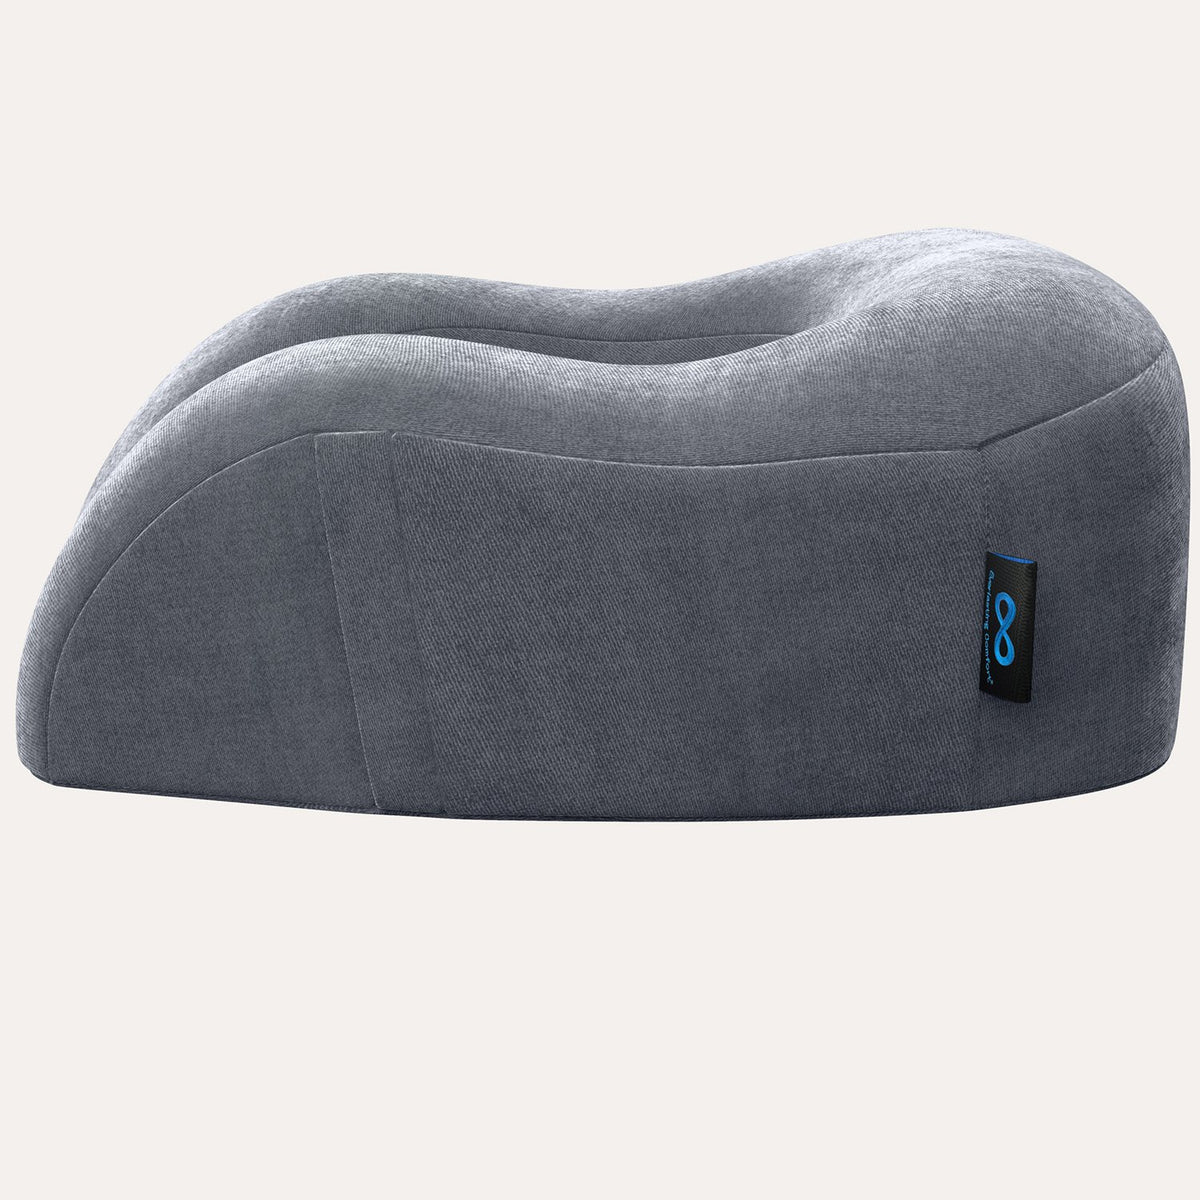 traveling comfortable memory foam seat cushion